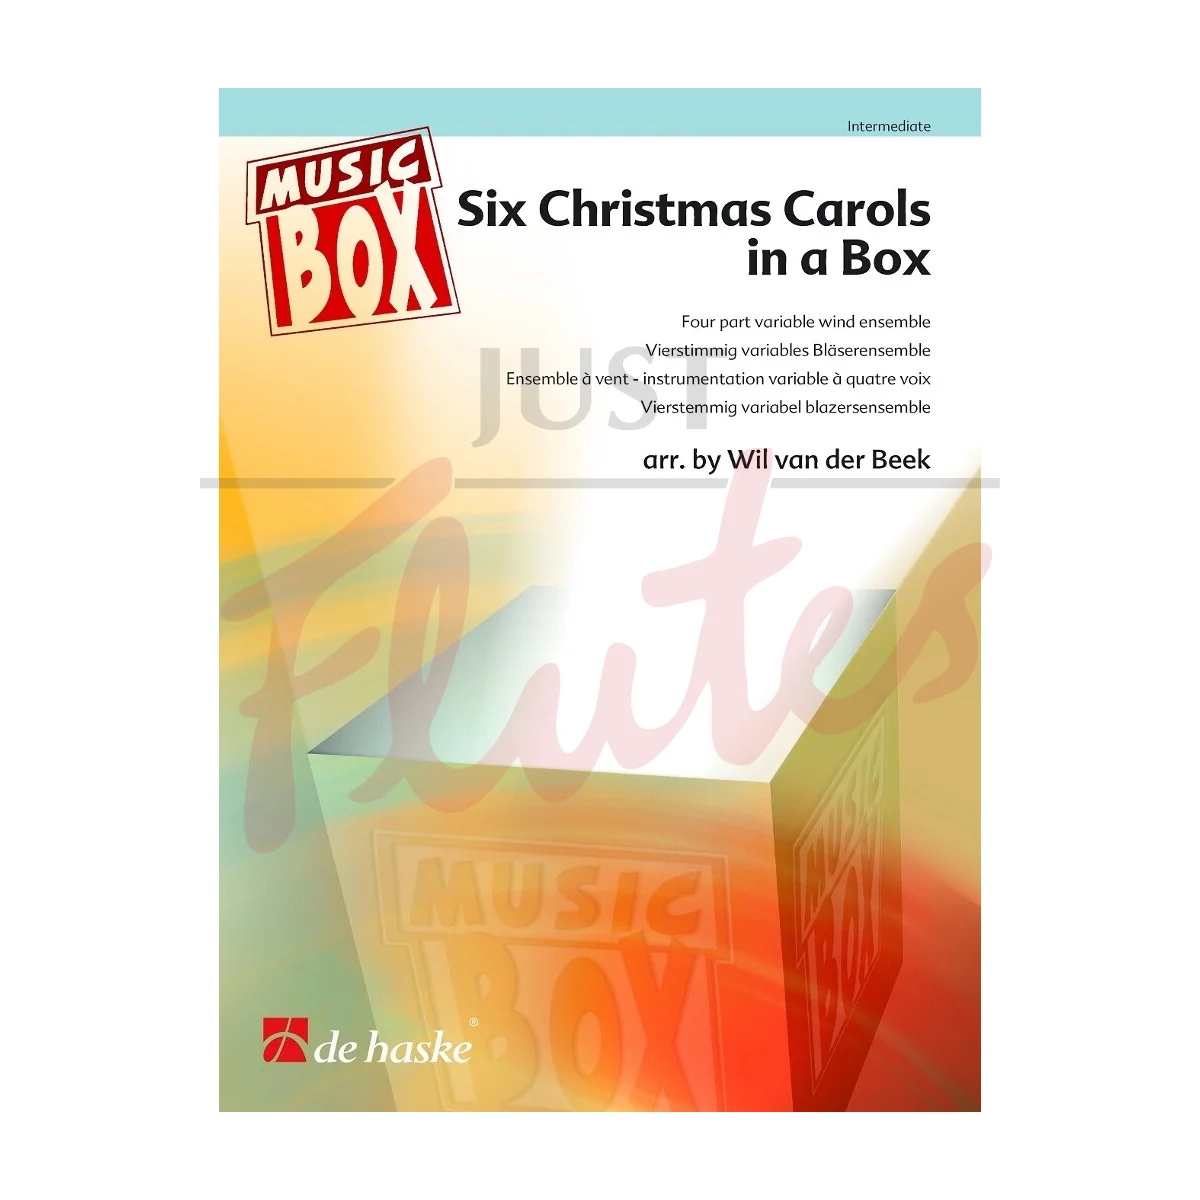 Six Christmas Carols in a Box for Four Part Flexible Wind Ensemble